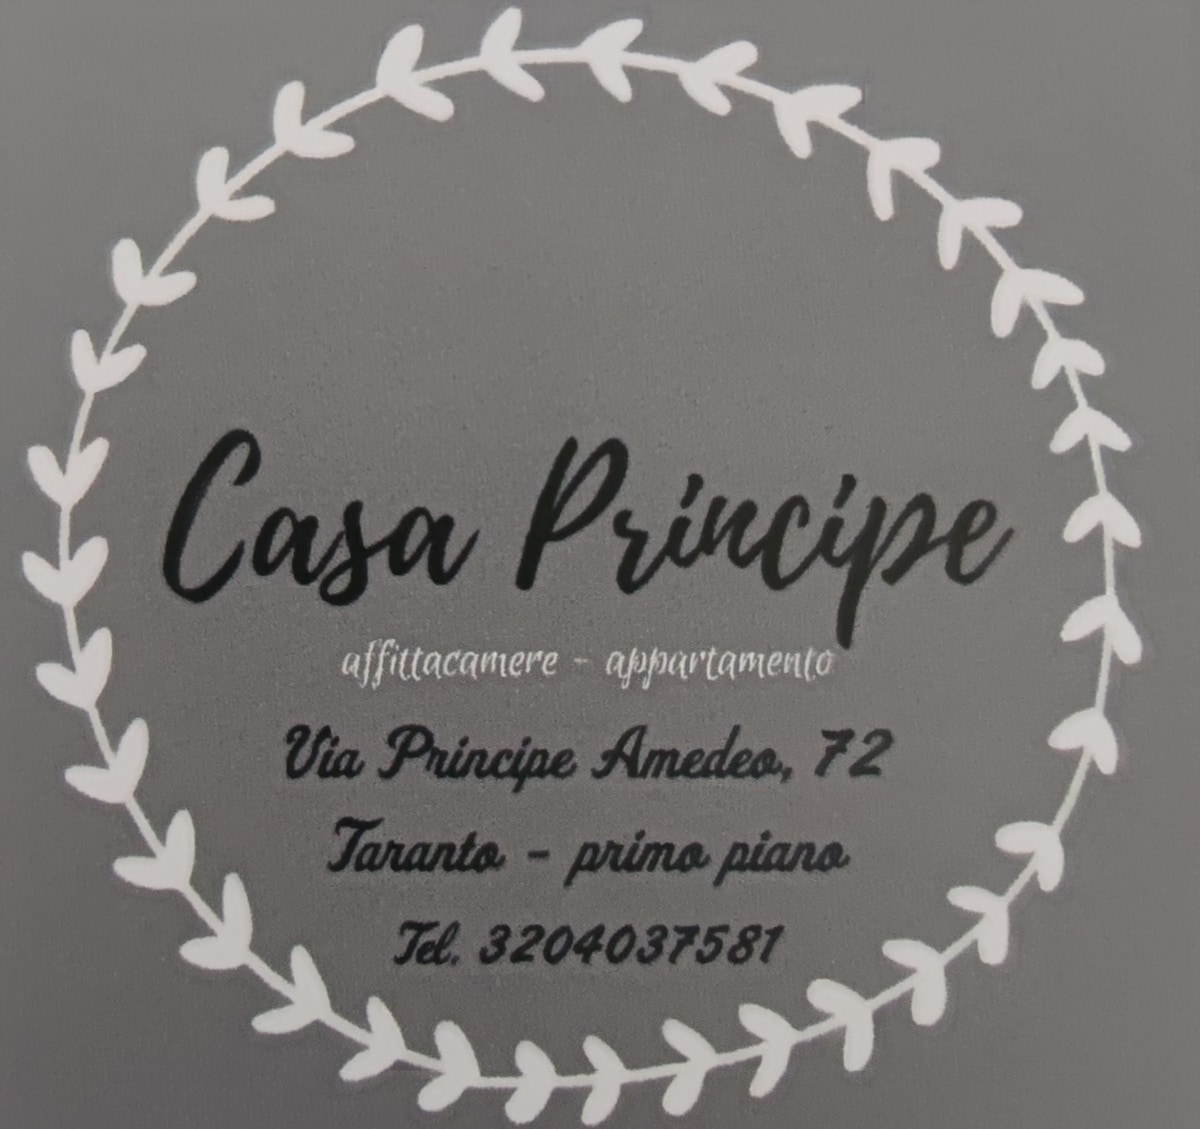 Casa Principe "整套公寓，配备厨房" 55平方米